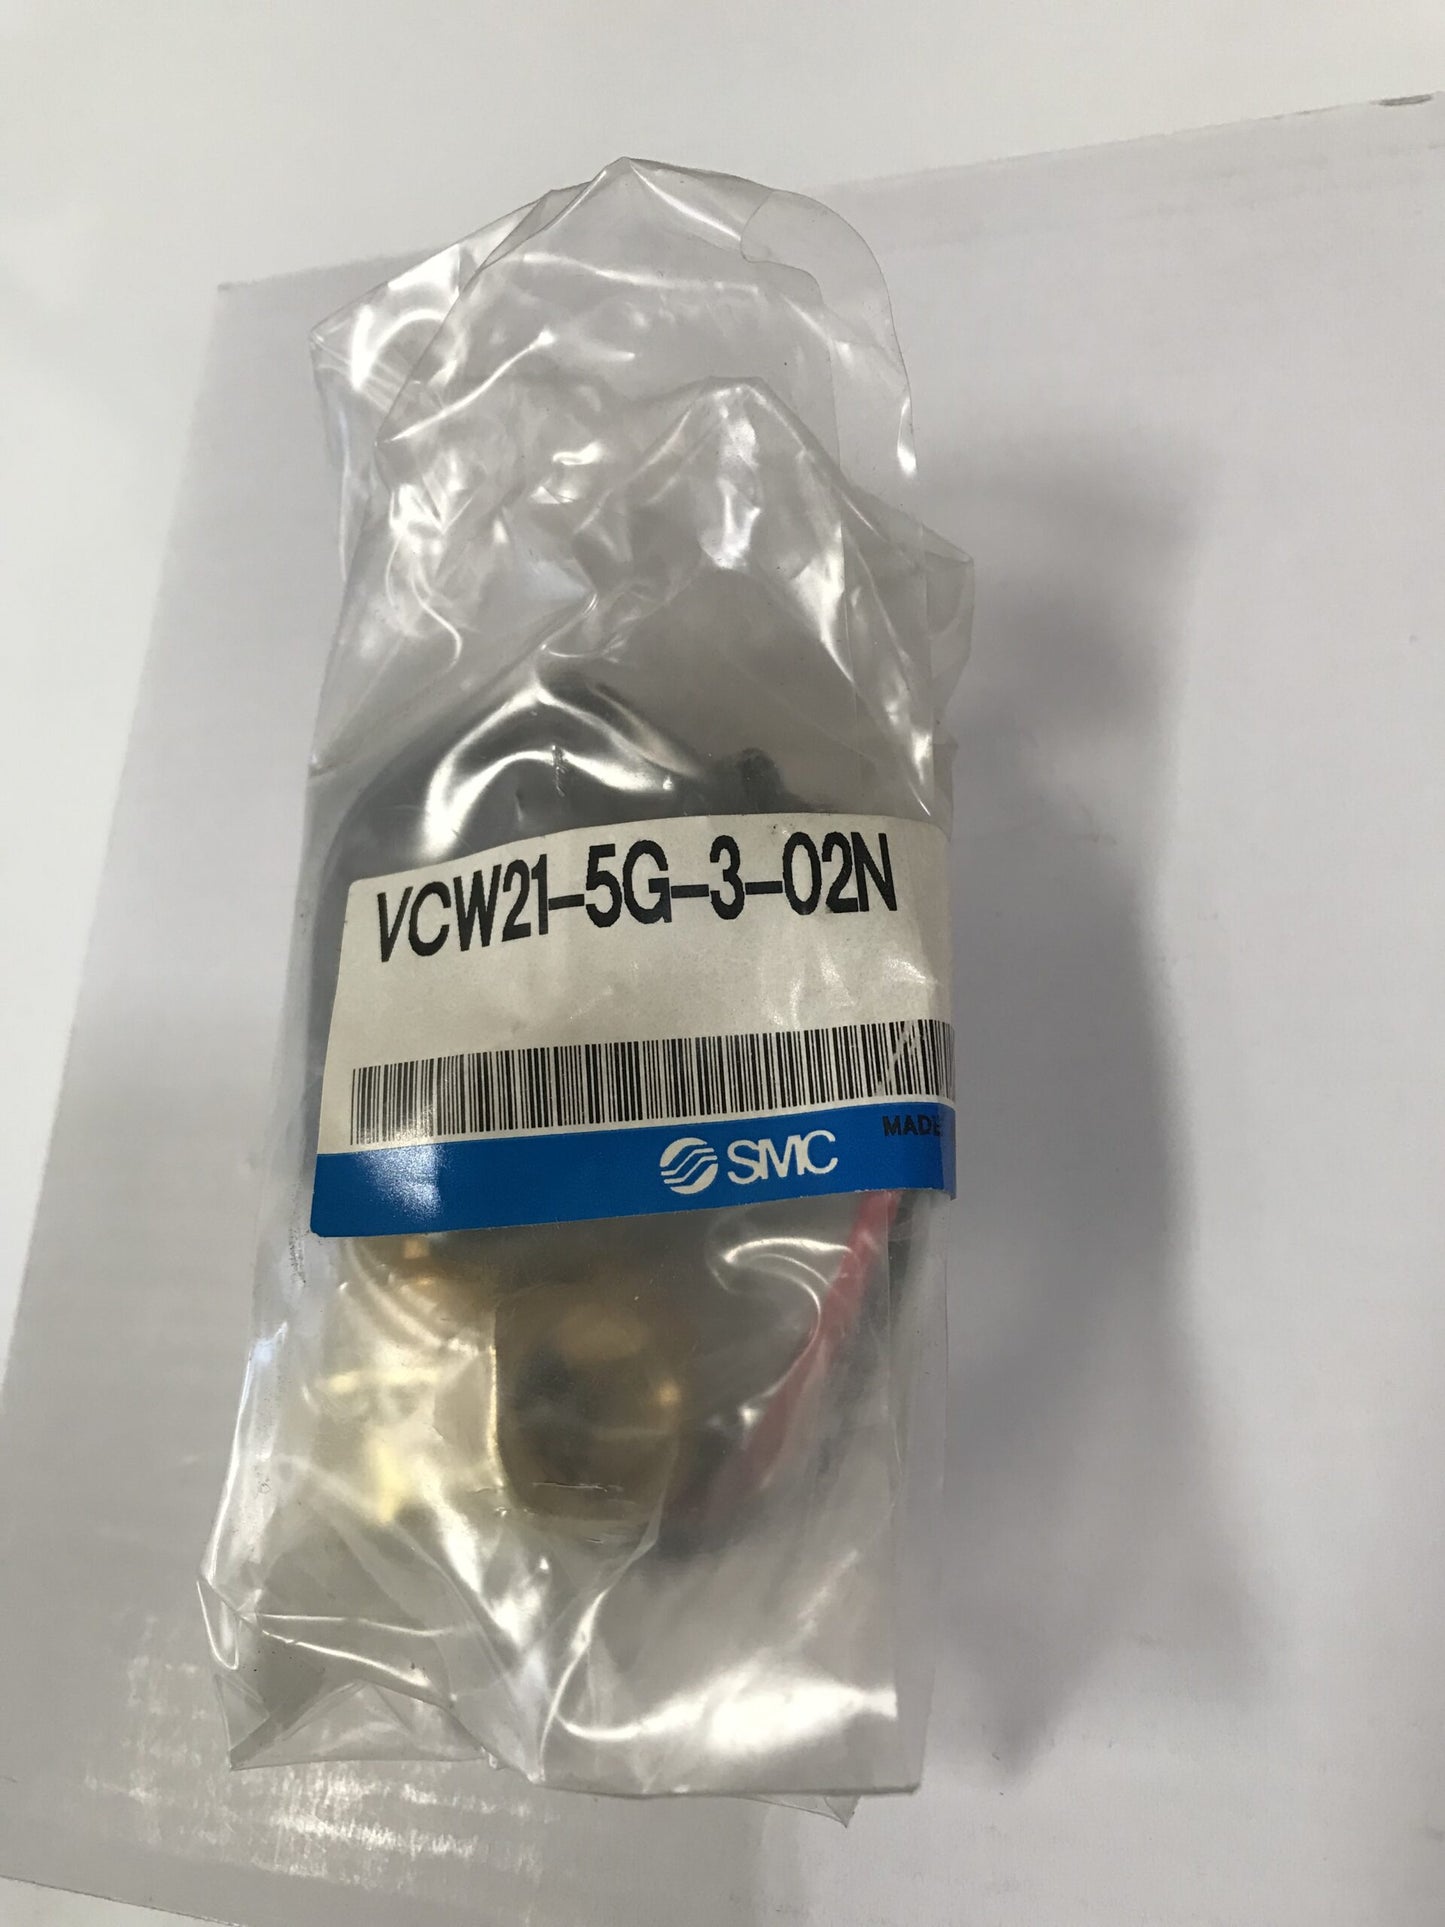 VCW21-5G-3-02N (solenoid valve)